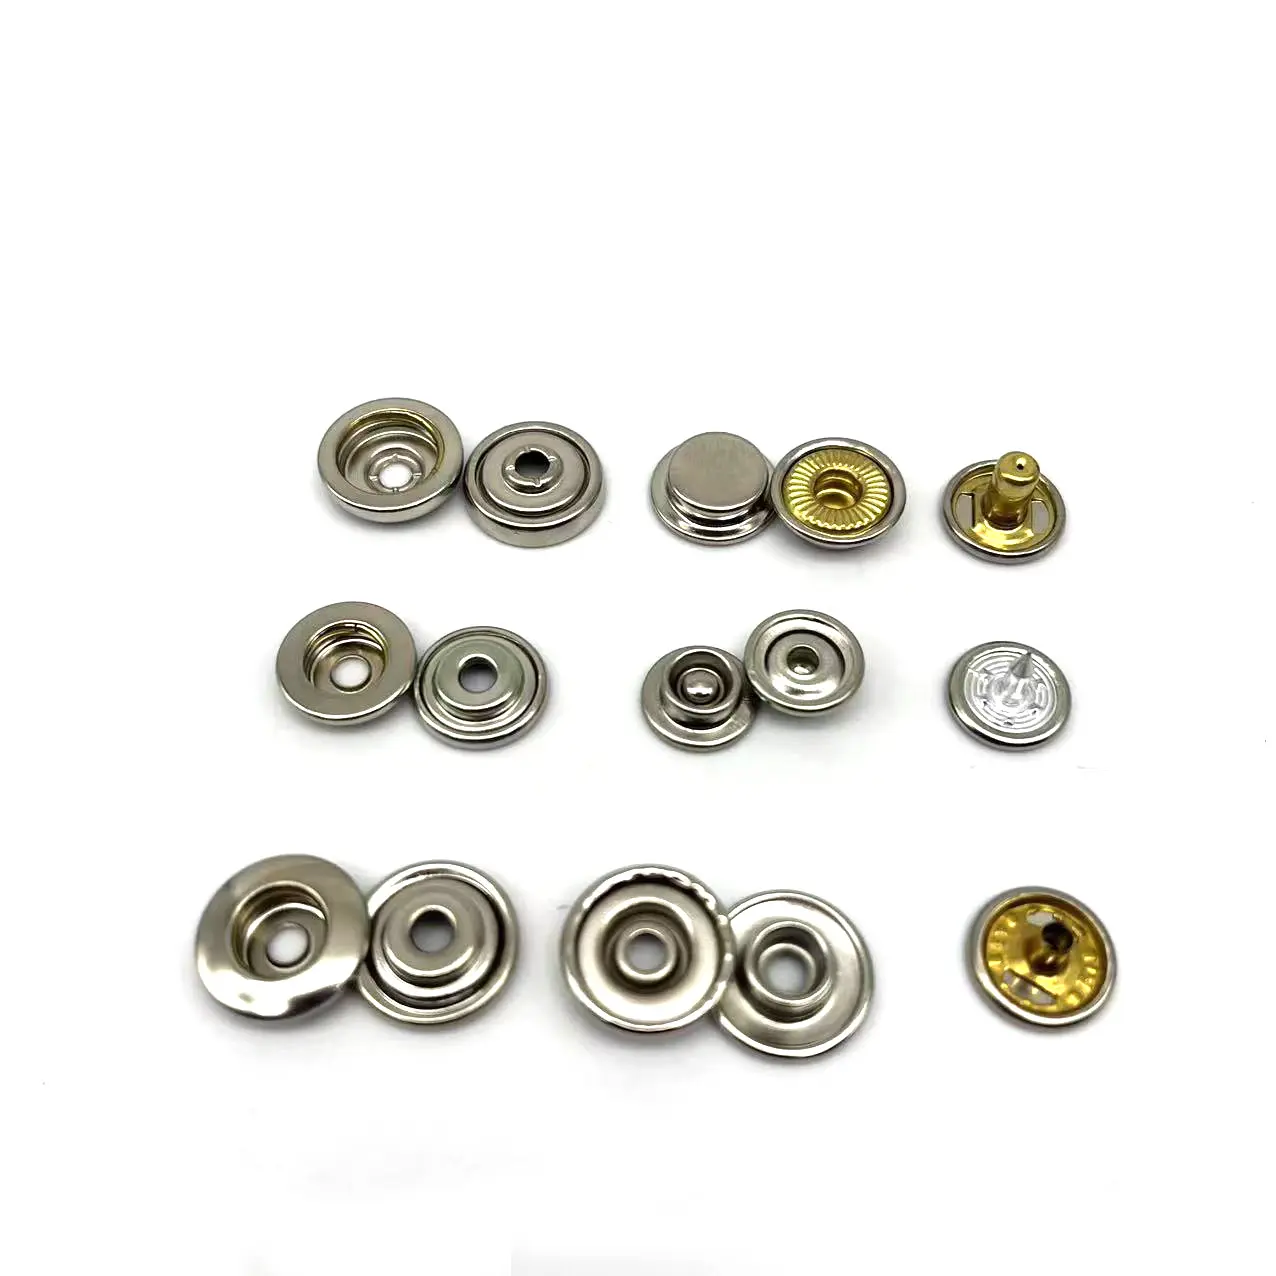 OEM ODM custom logo design zinc alloy brass metal 4 part button press stud button prong snap fastener button for garment clothes